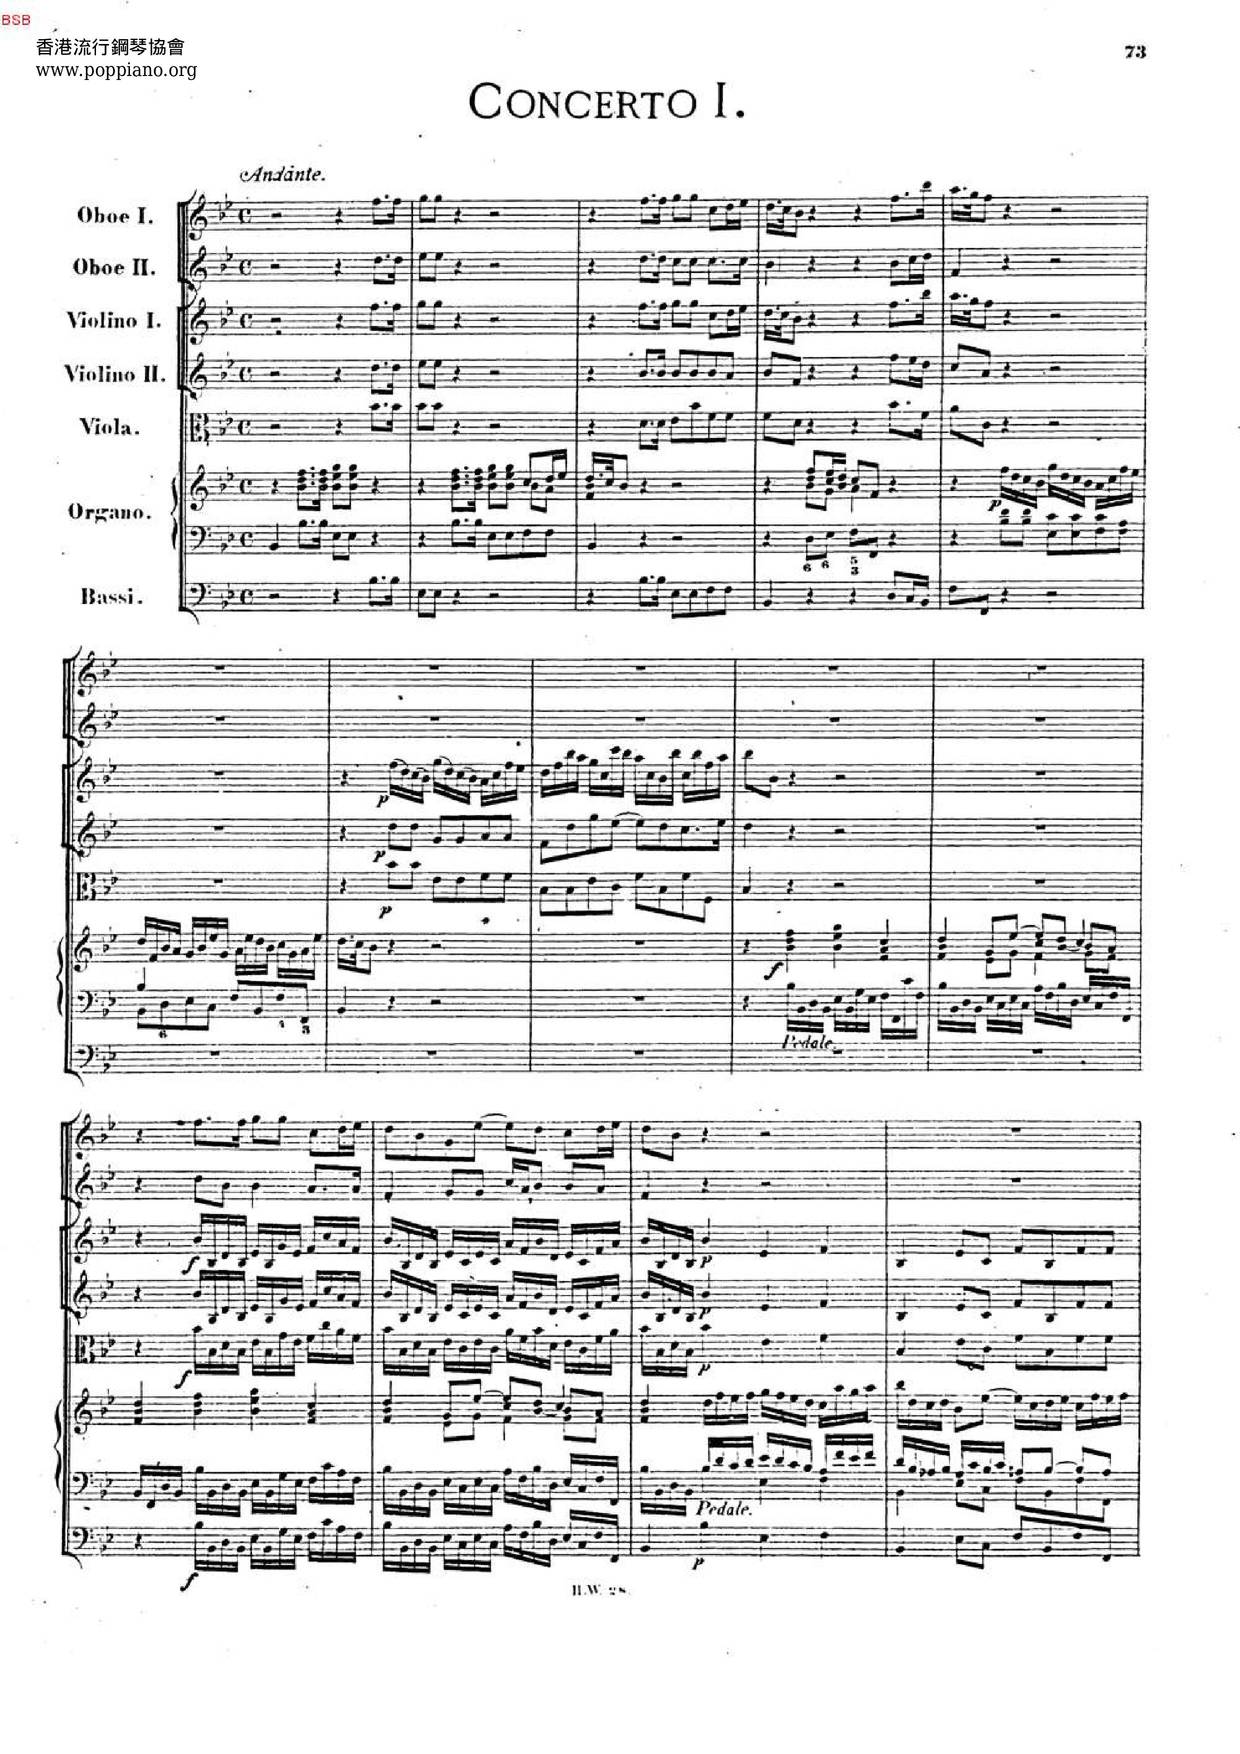 6 Organ Concertos, HWV 306-311ピアノ譜